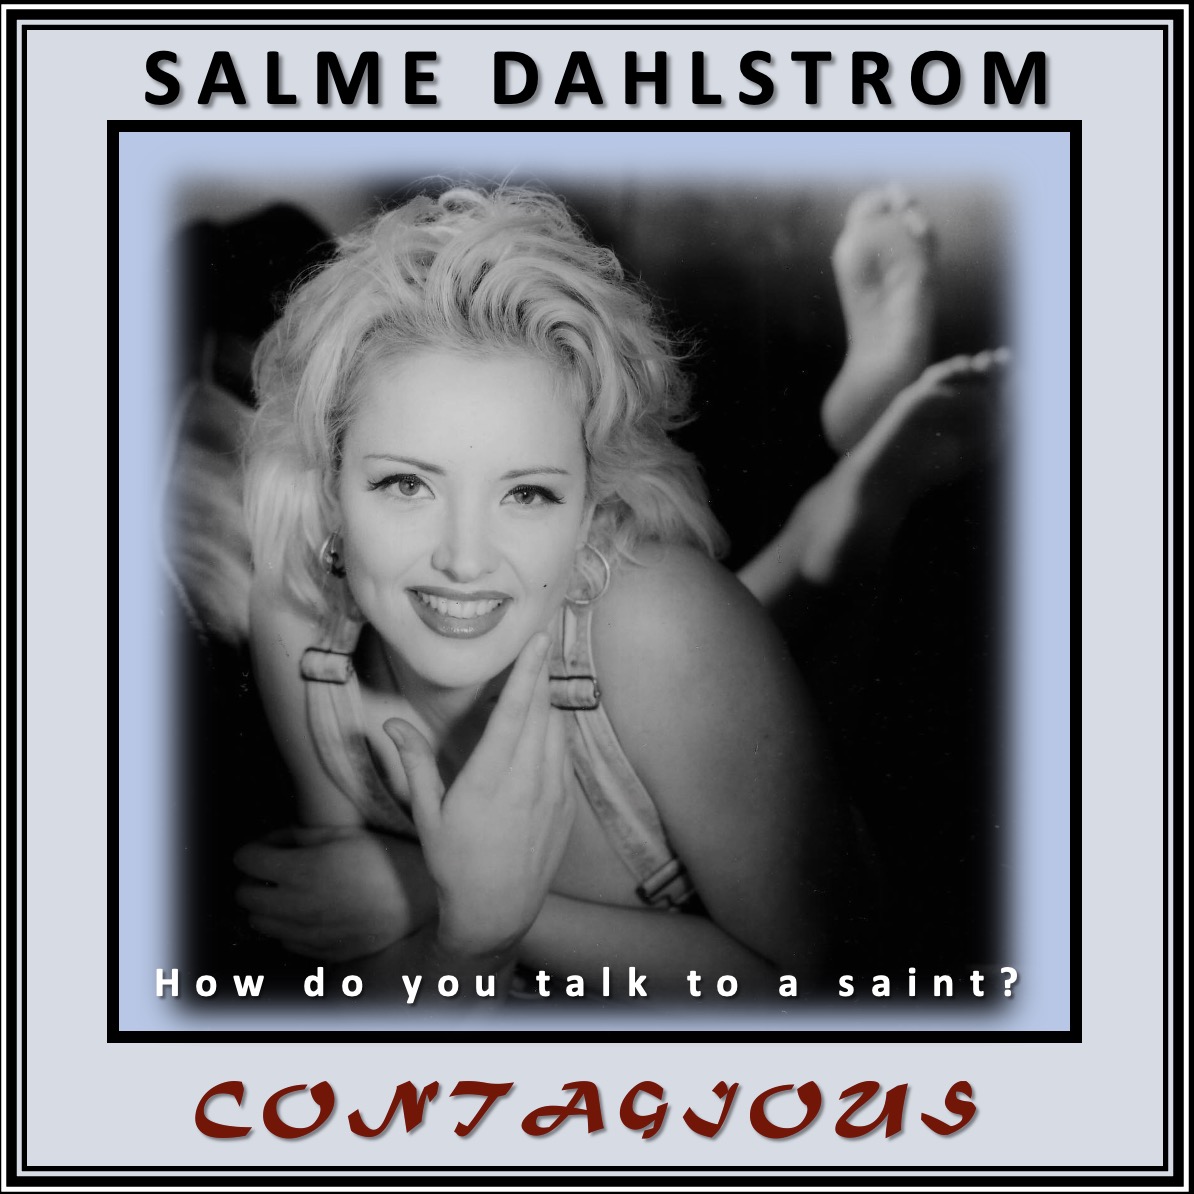 Salme Dahlstrom